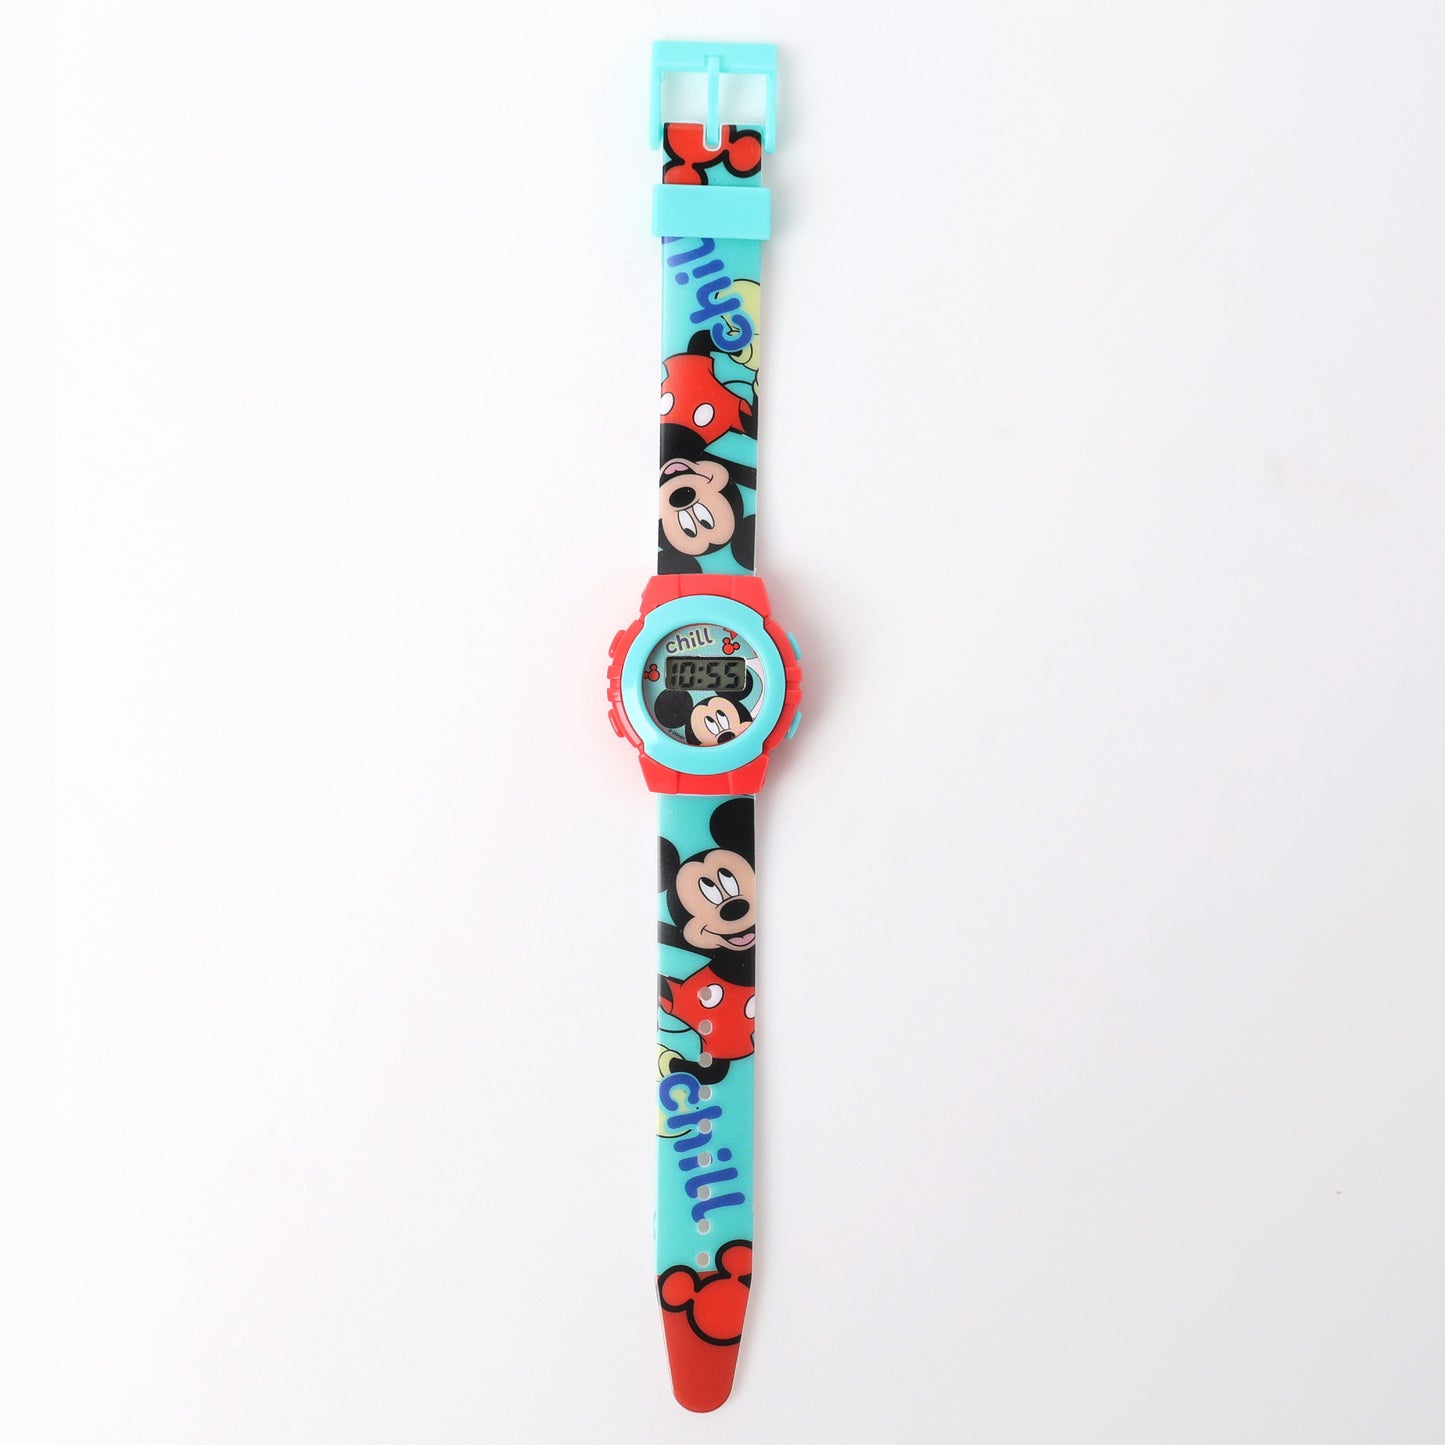 Disney Mickey Basic Digital Watches